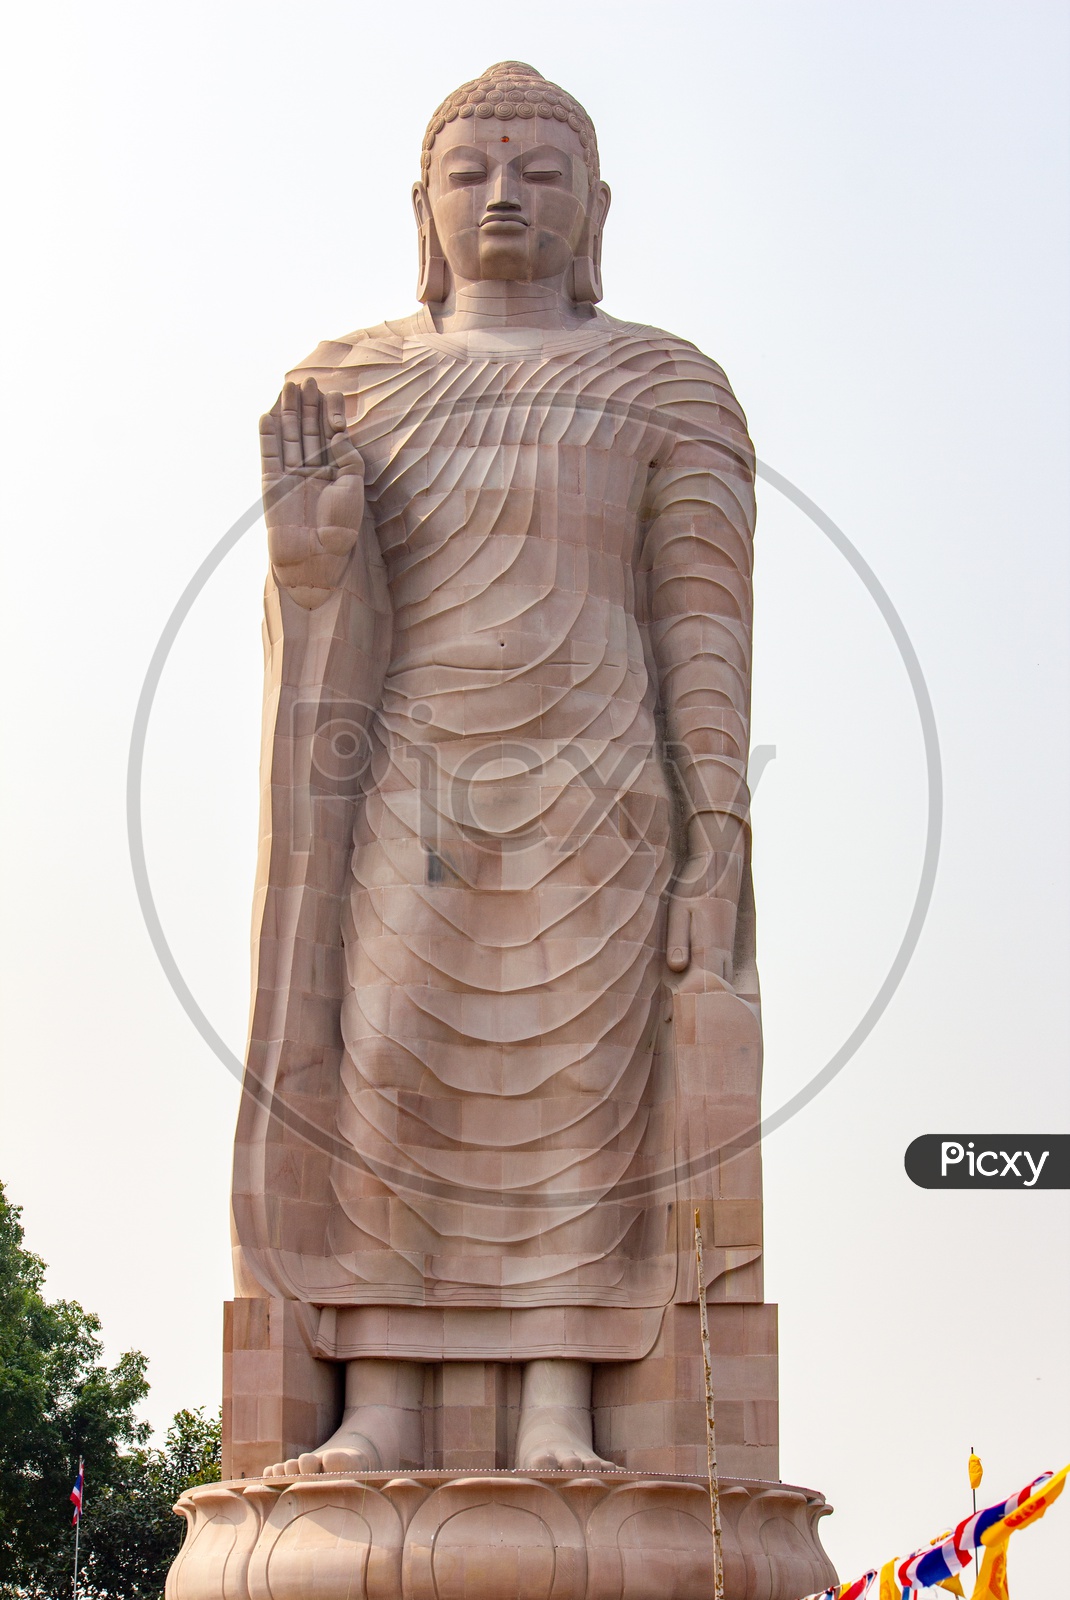 The Giant Buddha of Sarnath